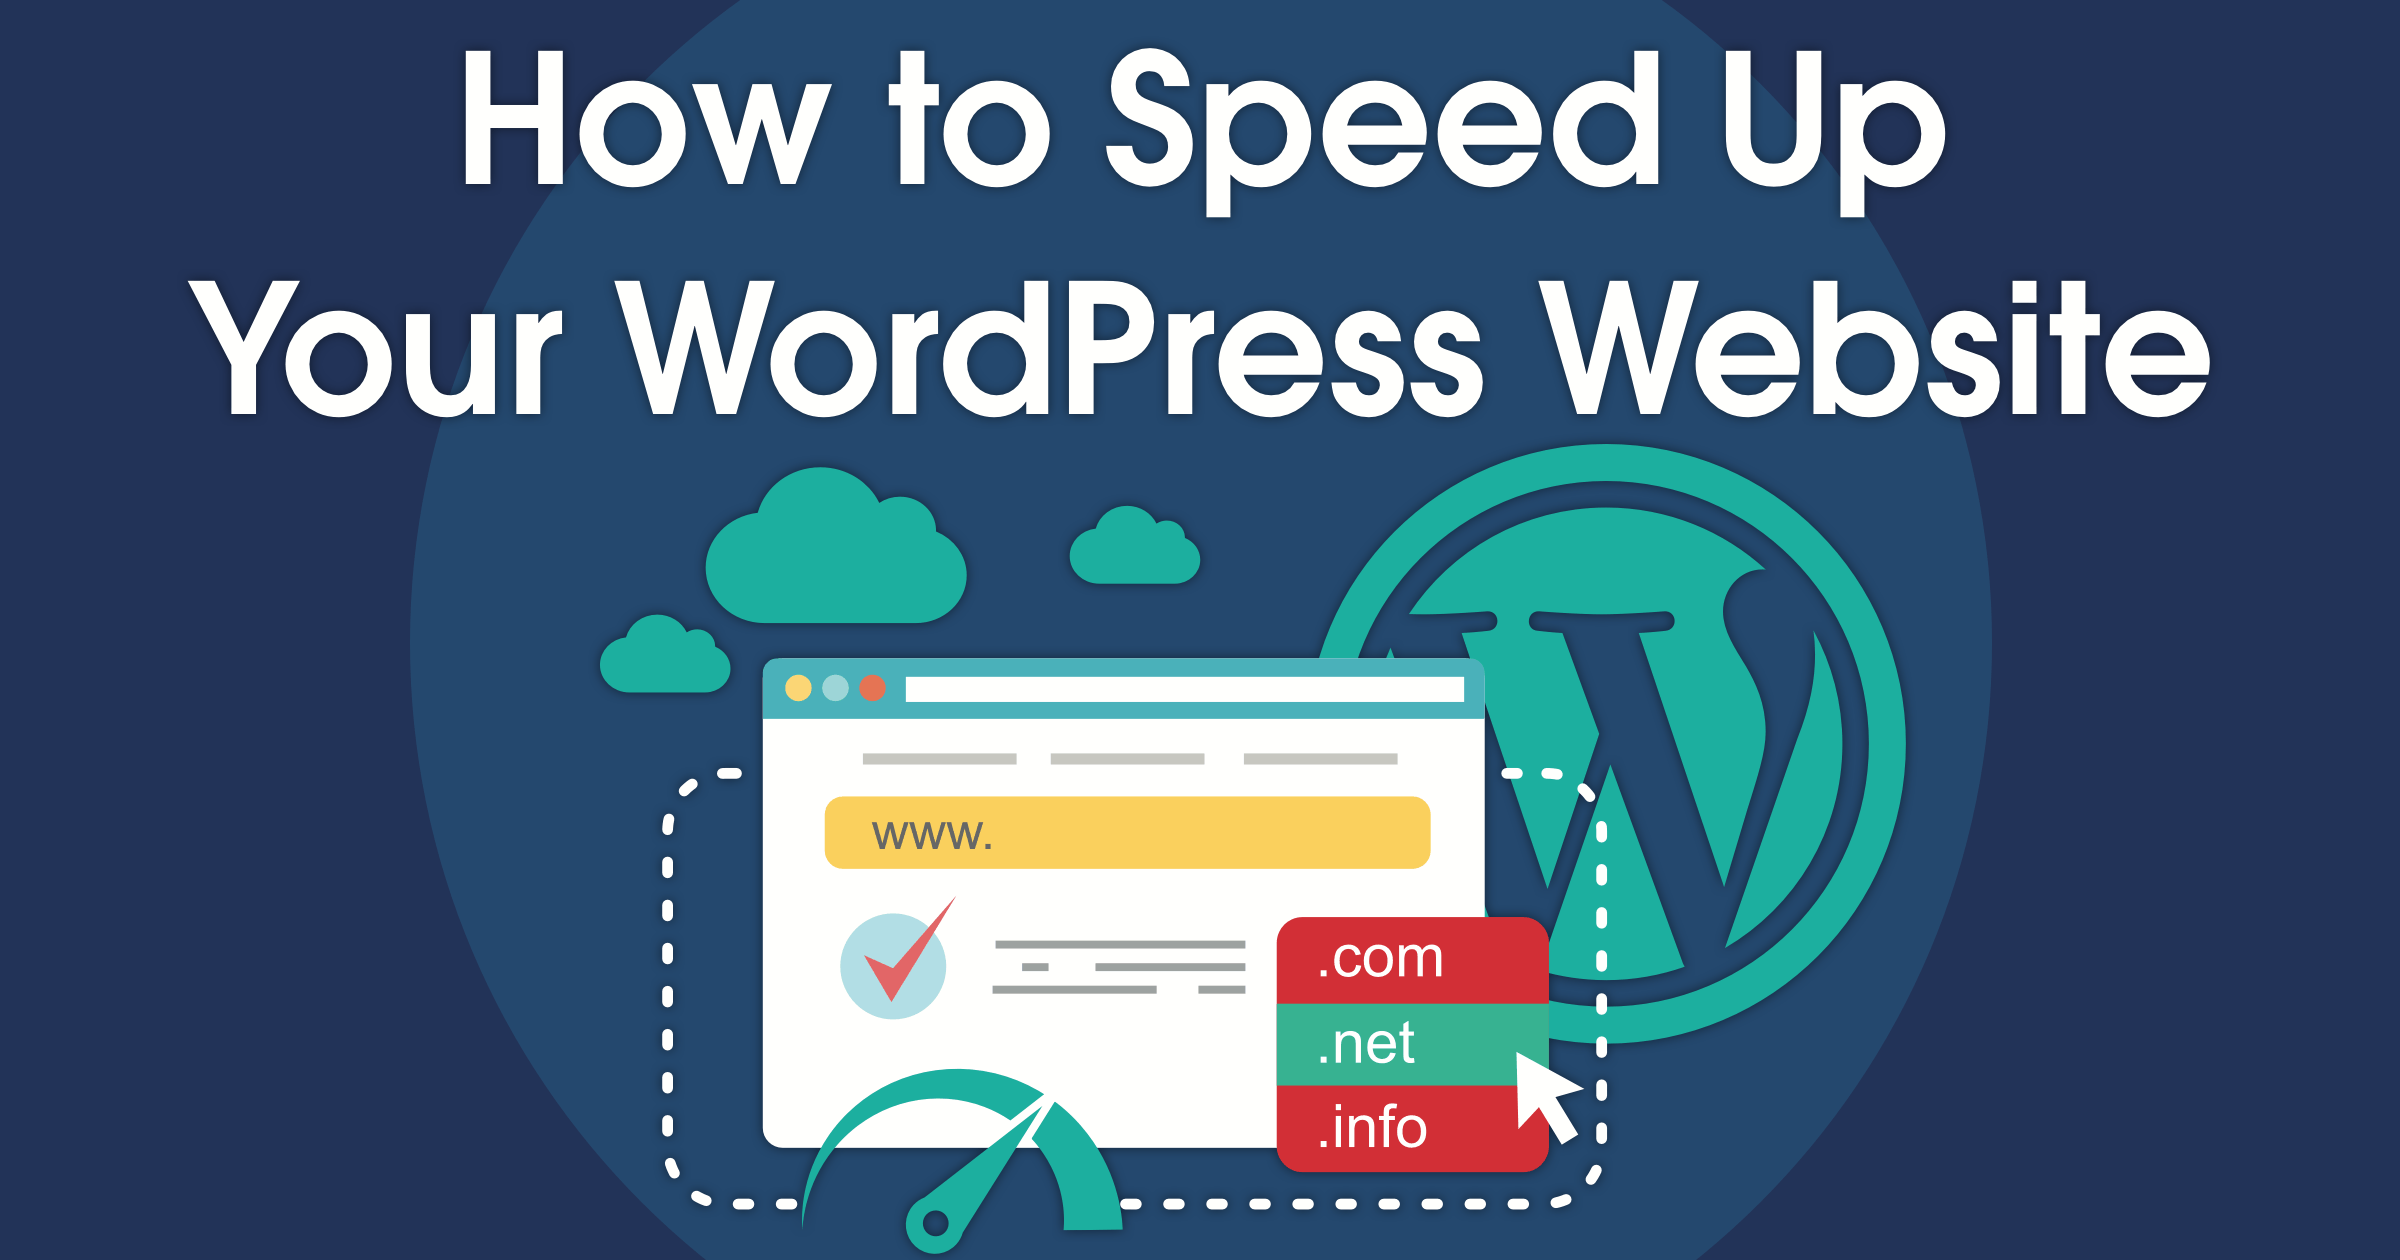 15+ Ways to Speed Up Your WordPress Website (2021 Guide)